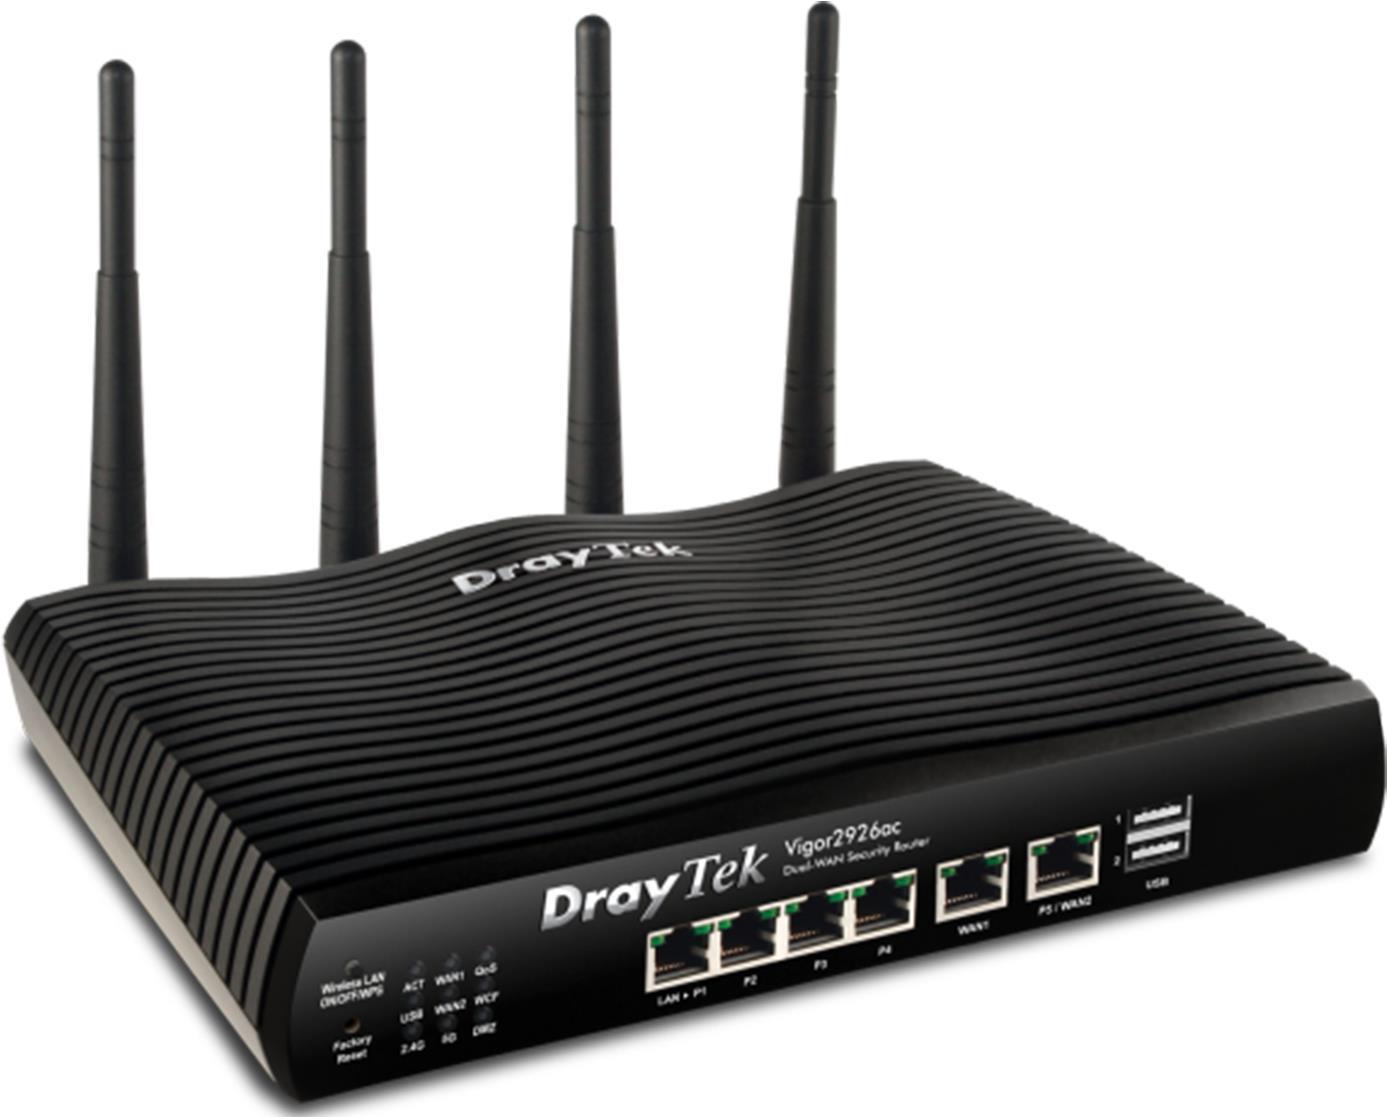 Draytek Vigor 2926ac Wireless AC Dual-WAN Security-Router retail (V2926AC)